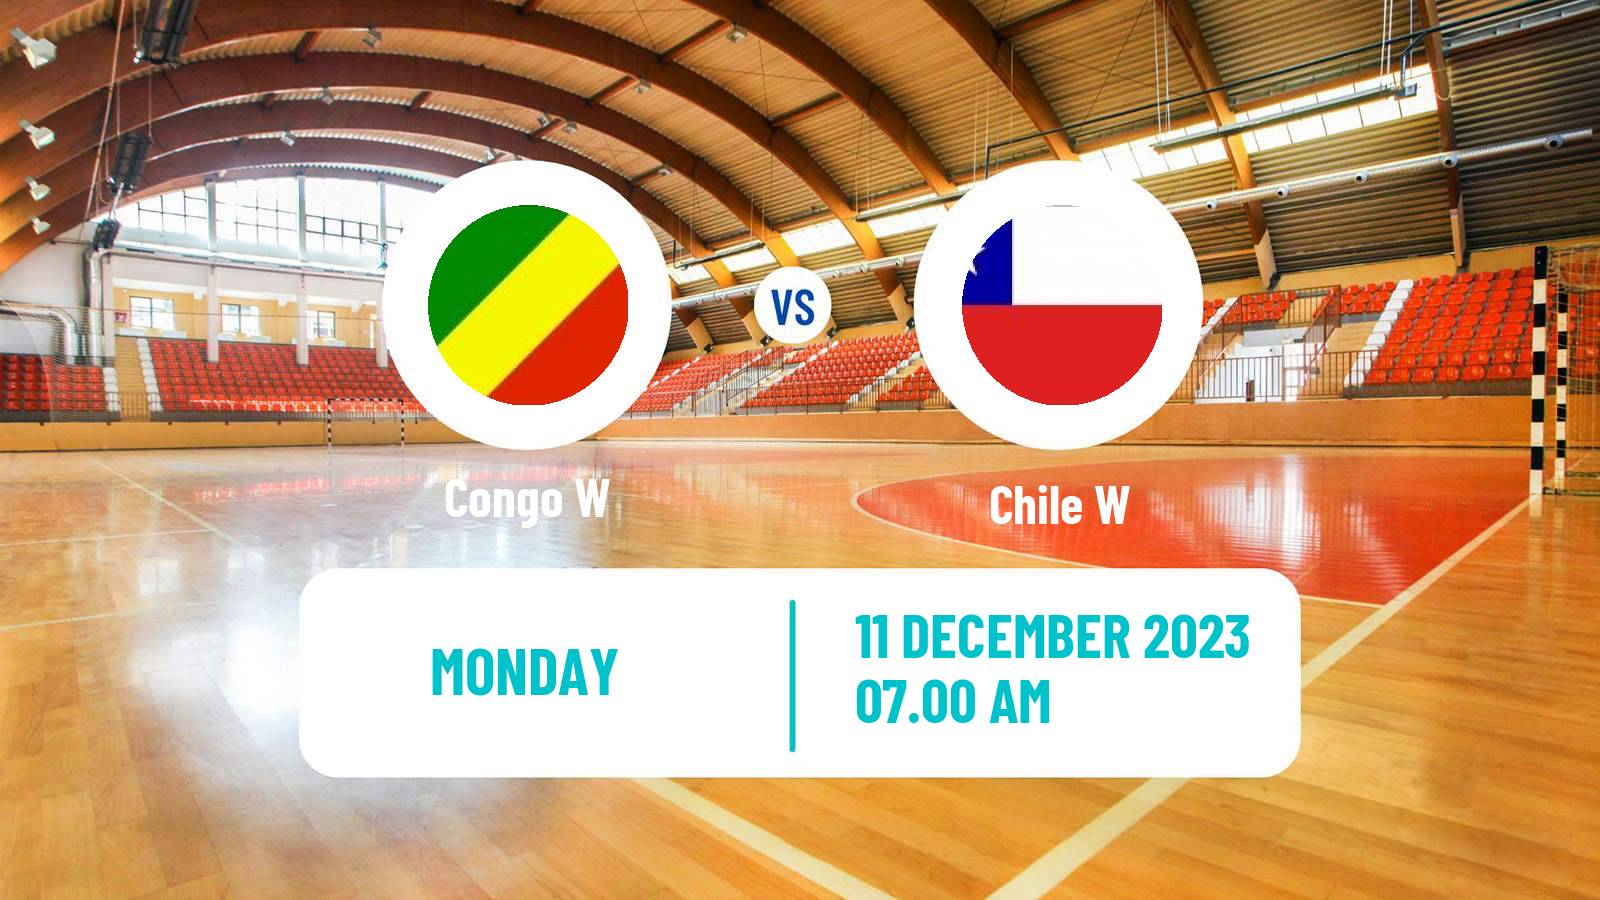 Handball Handball World Championship Women Congo W - Chile W